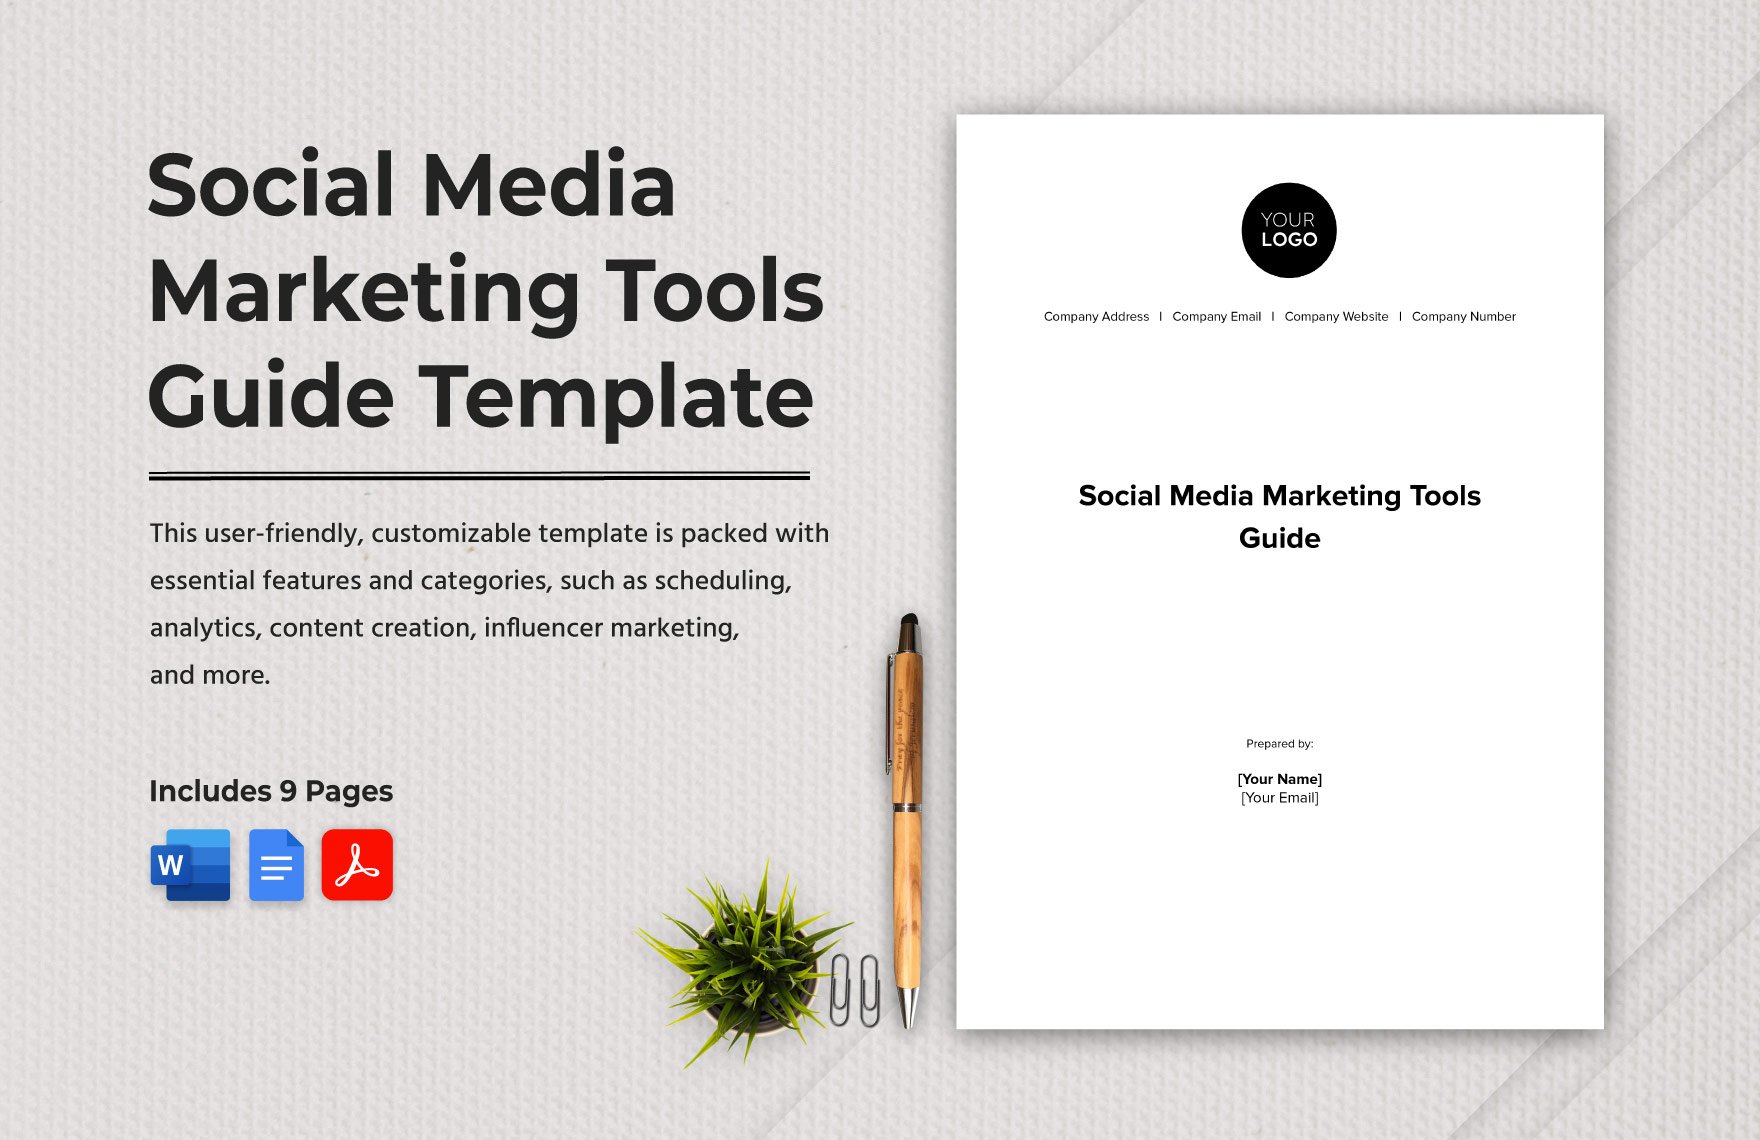 Social Media Marketing Tools Guide Template 